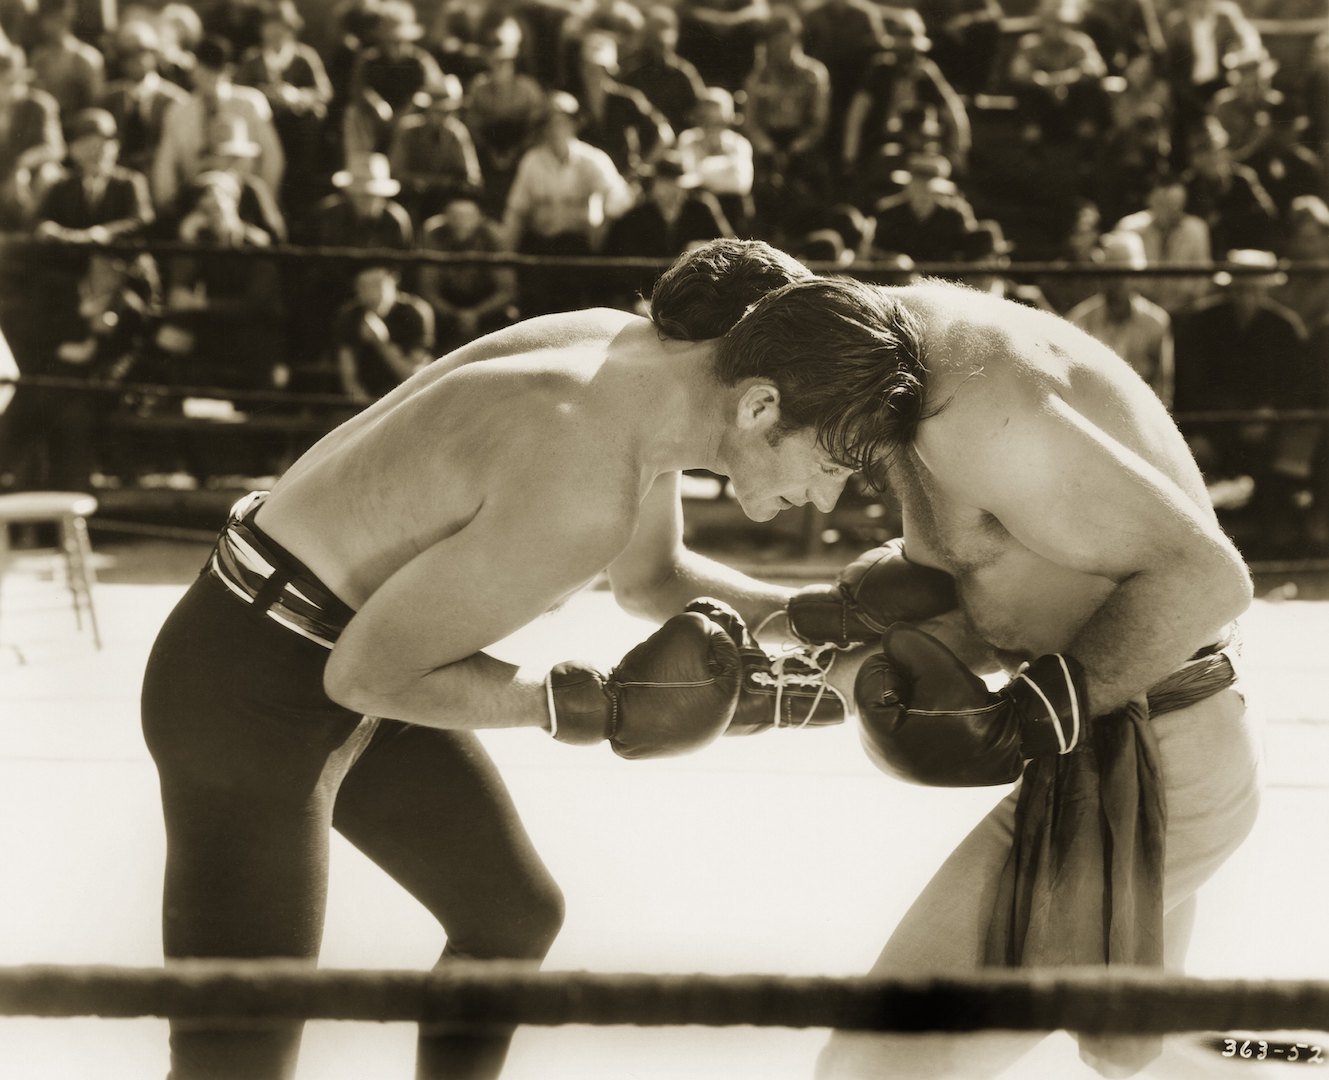 John Wayne and 'Wagon Train' actor Ward Bond going head to head in a boxing scene